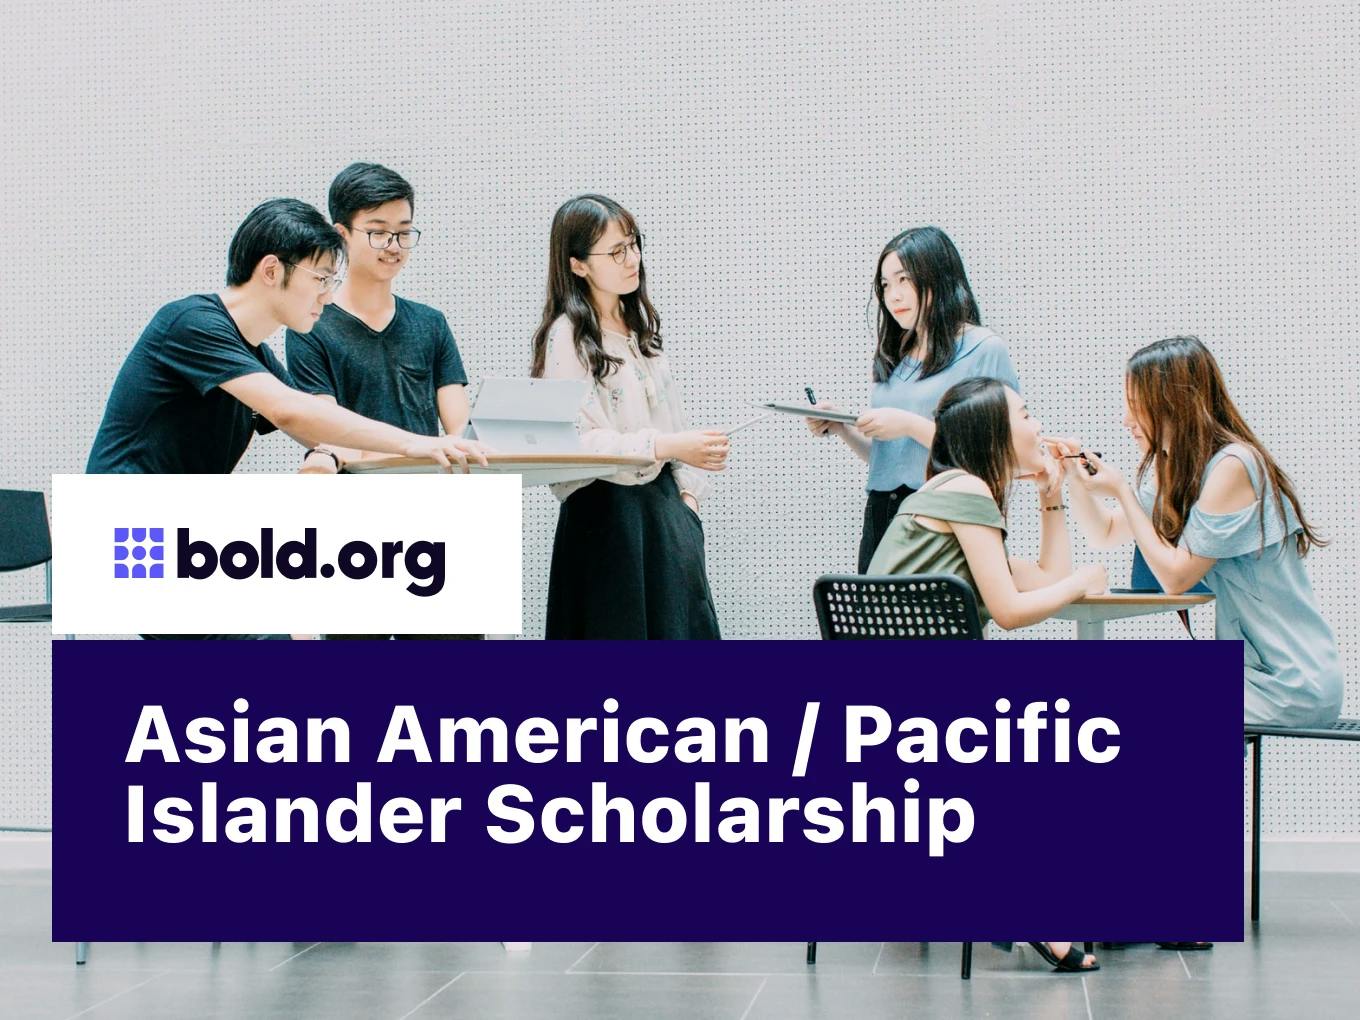 Asian American / Pacific Islander Scholarship